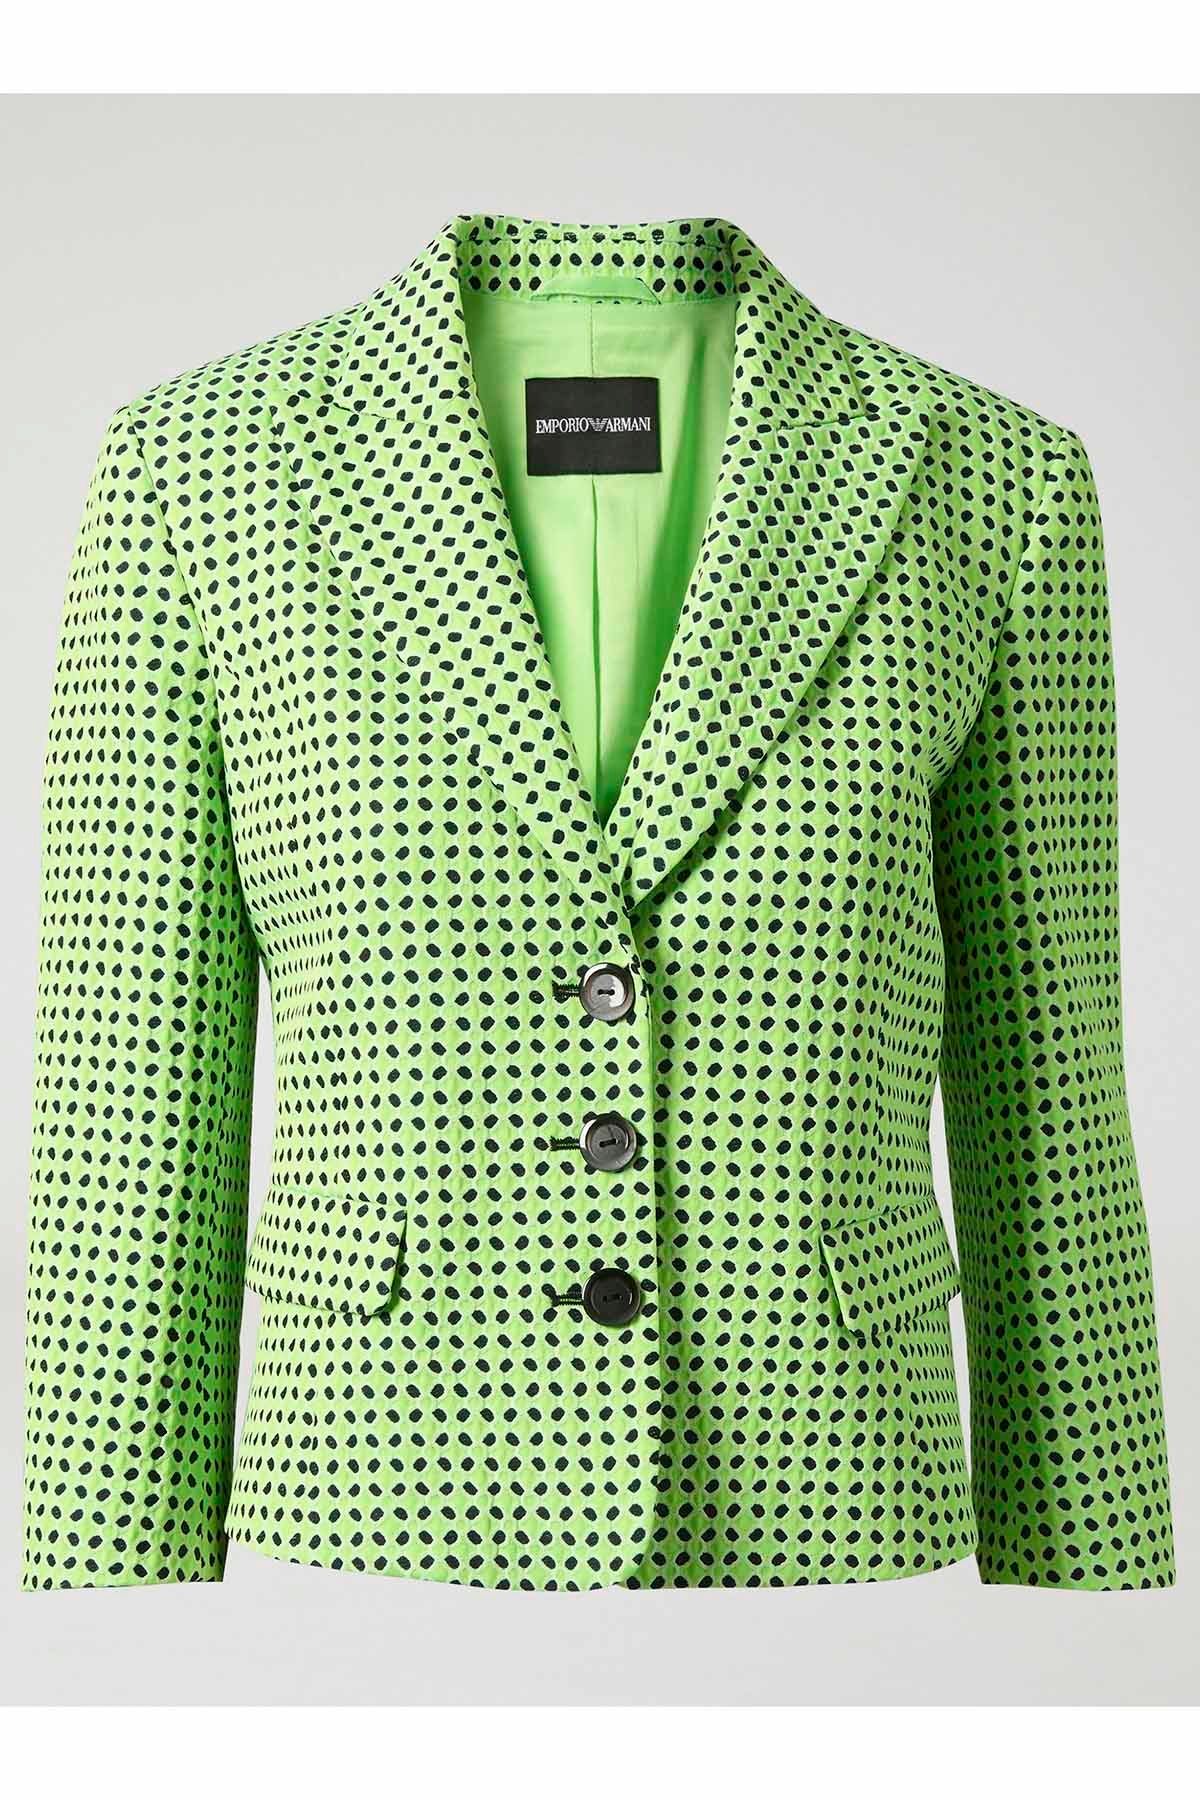 Emporio Armani Kadın Yeşil Ceket Wng44T W2107 015